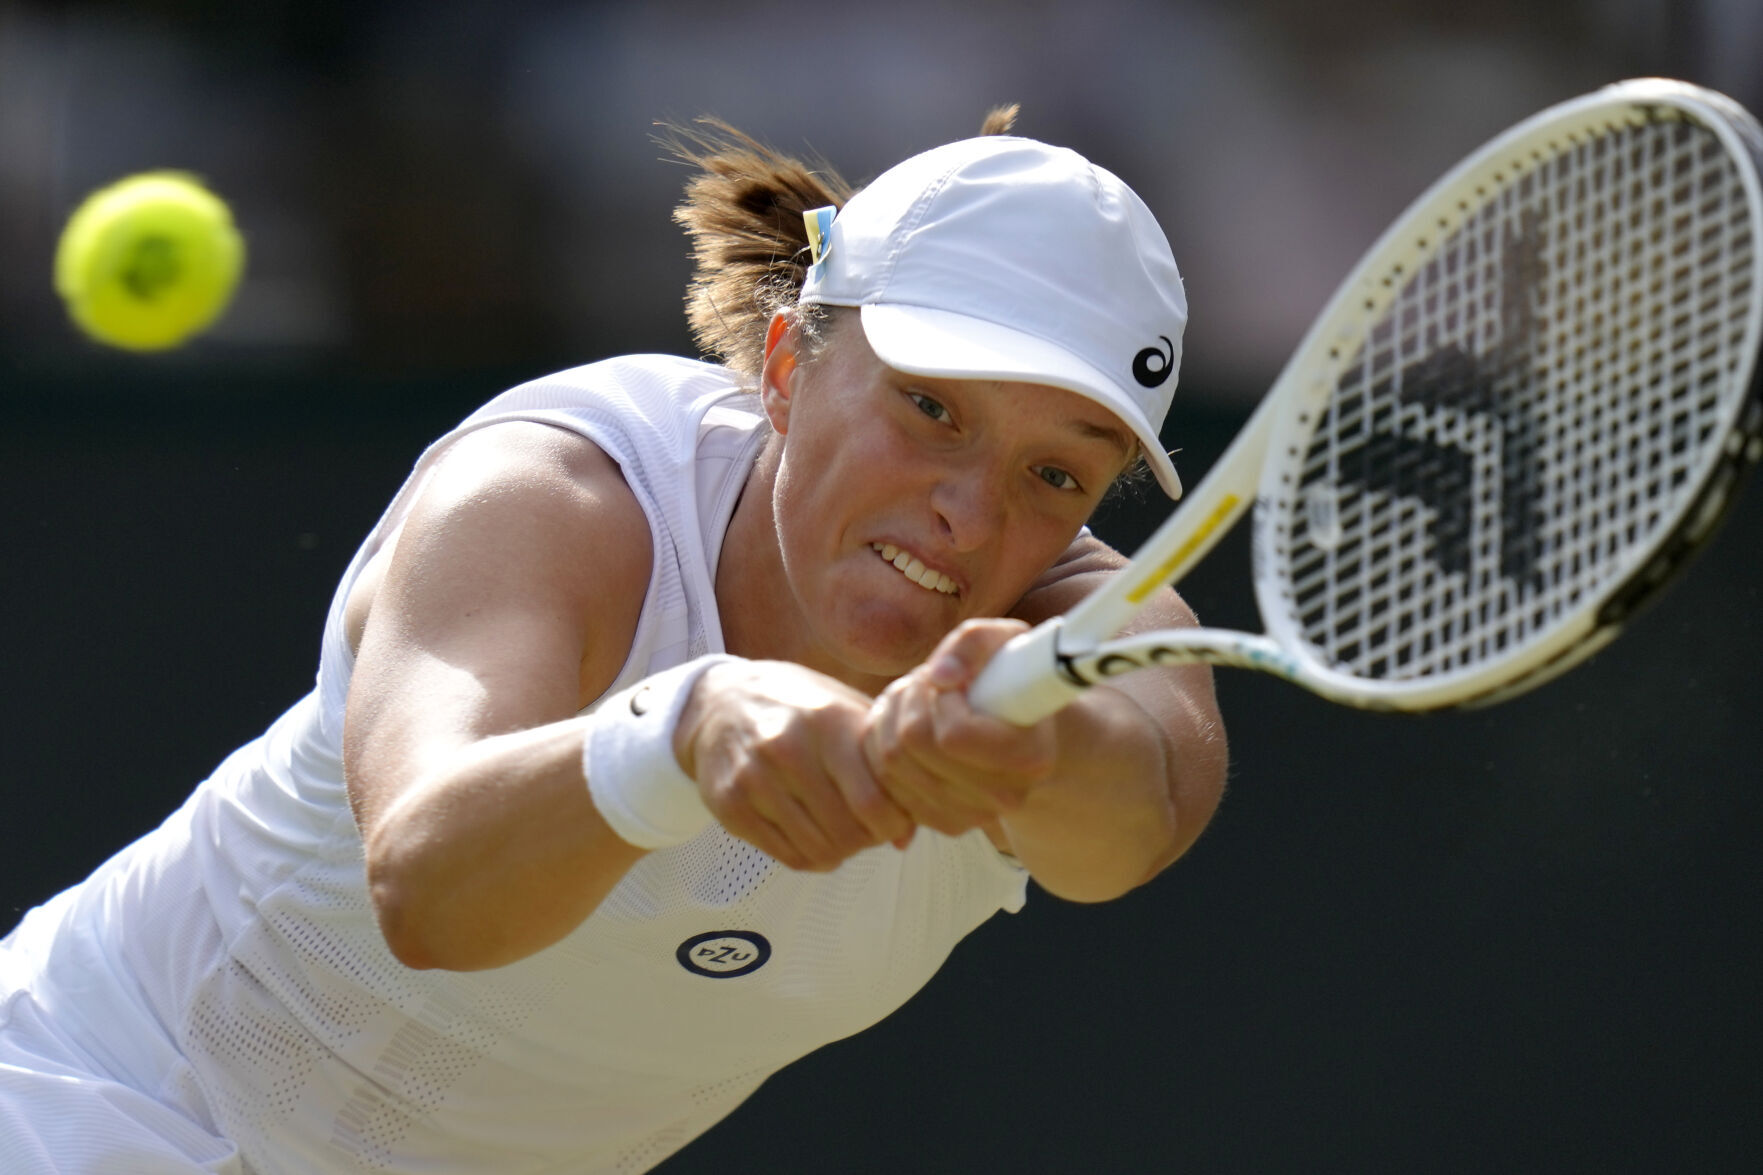 Can Swiatek add a Slam title at Wimbledon?